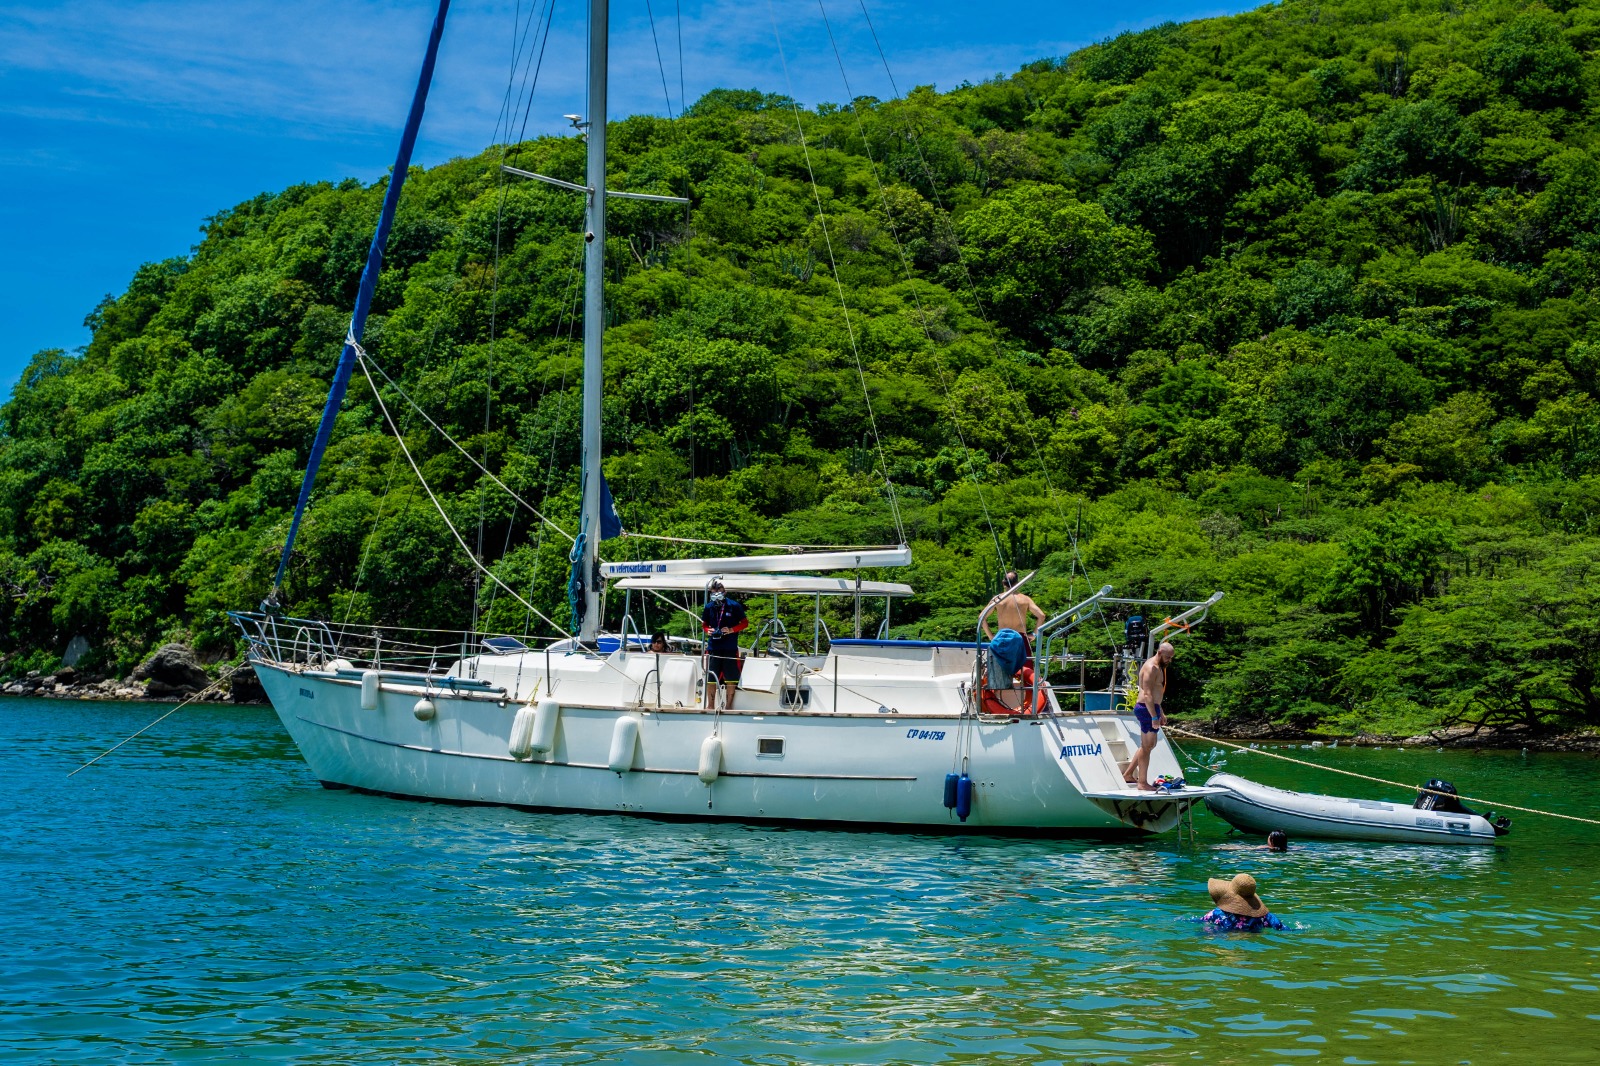 Sailboat Tour | Visit Santa Marta